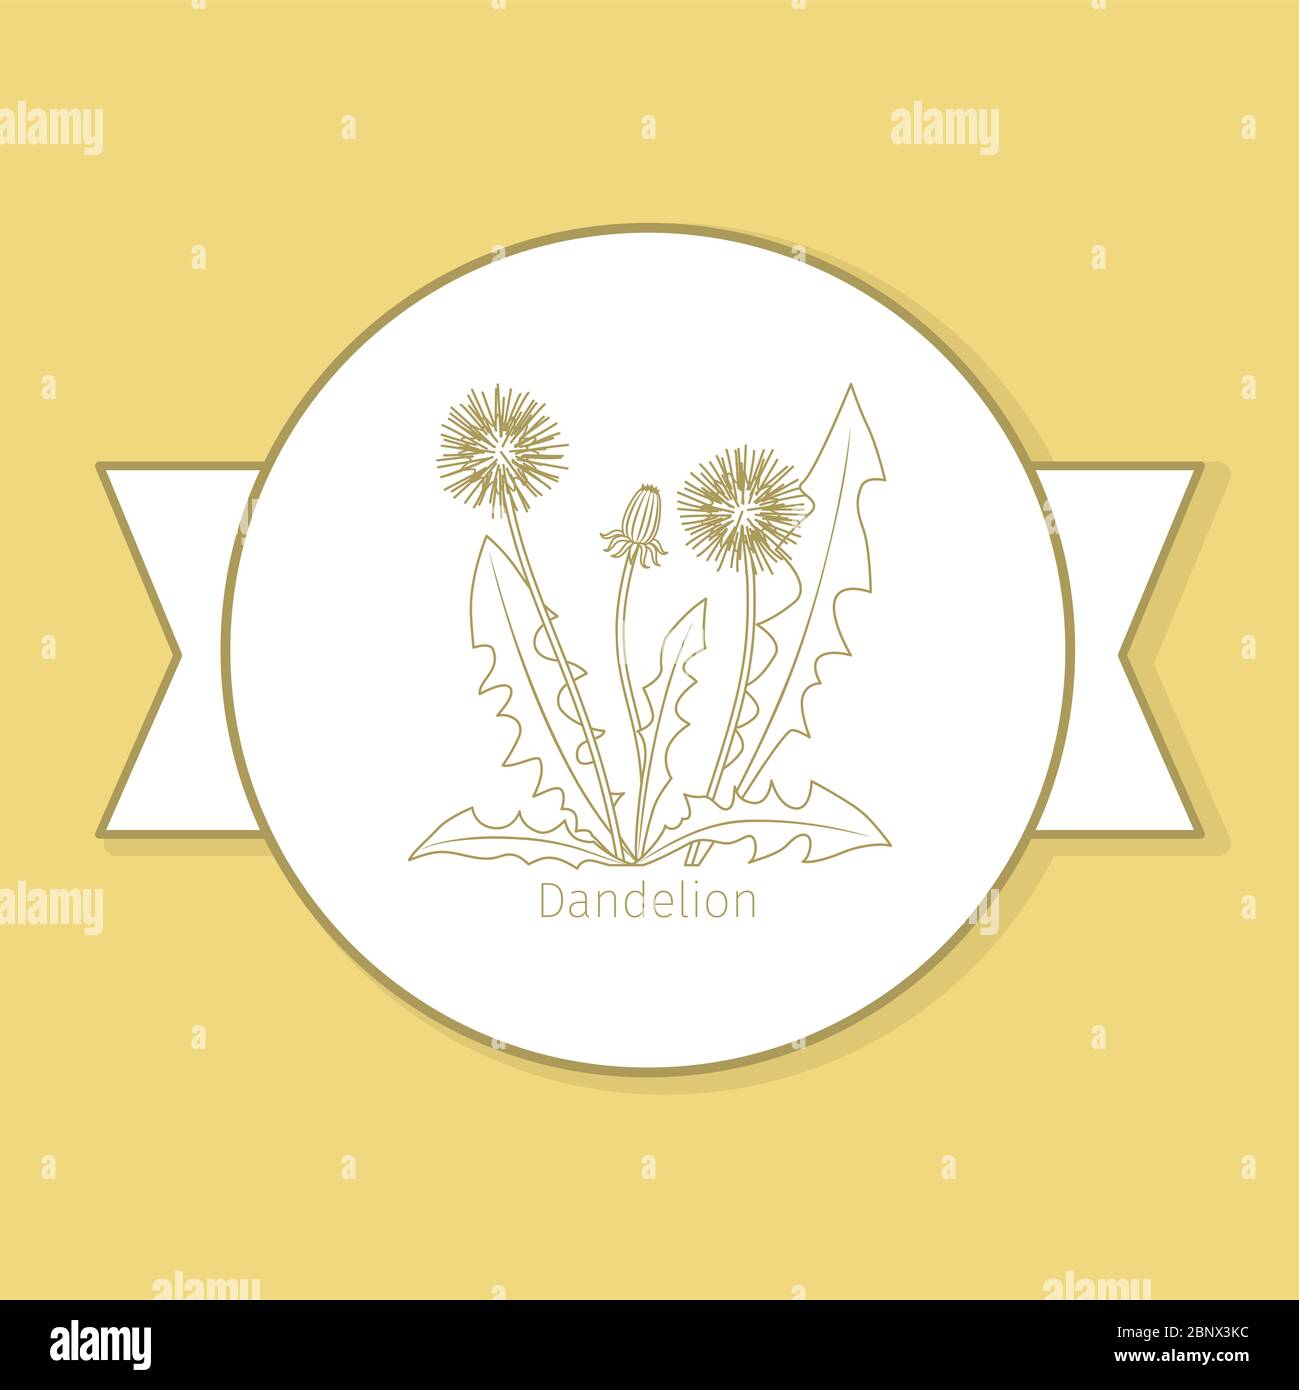 Dandelion medicine plant, yellow label design in circle shape. Vector illustration Stock Vector